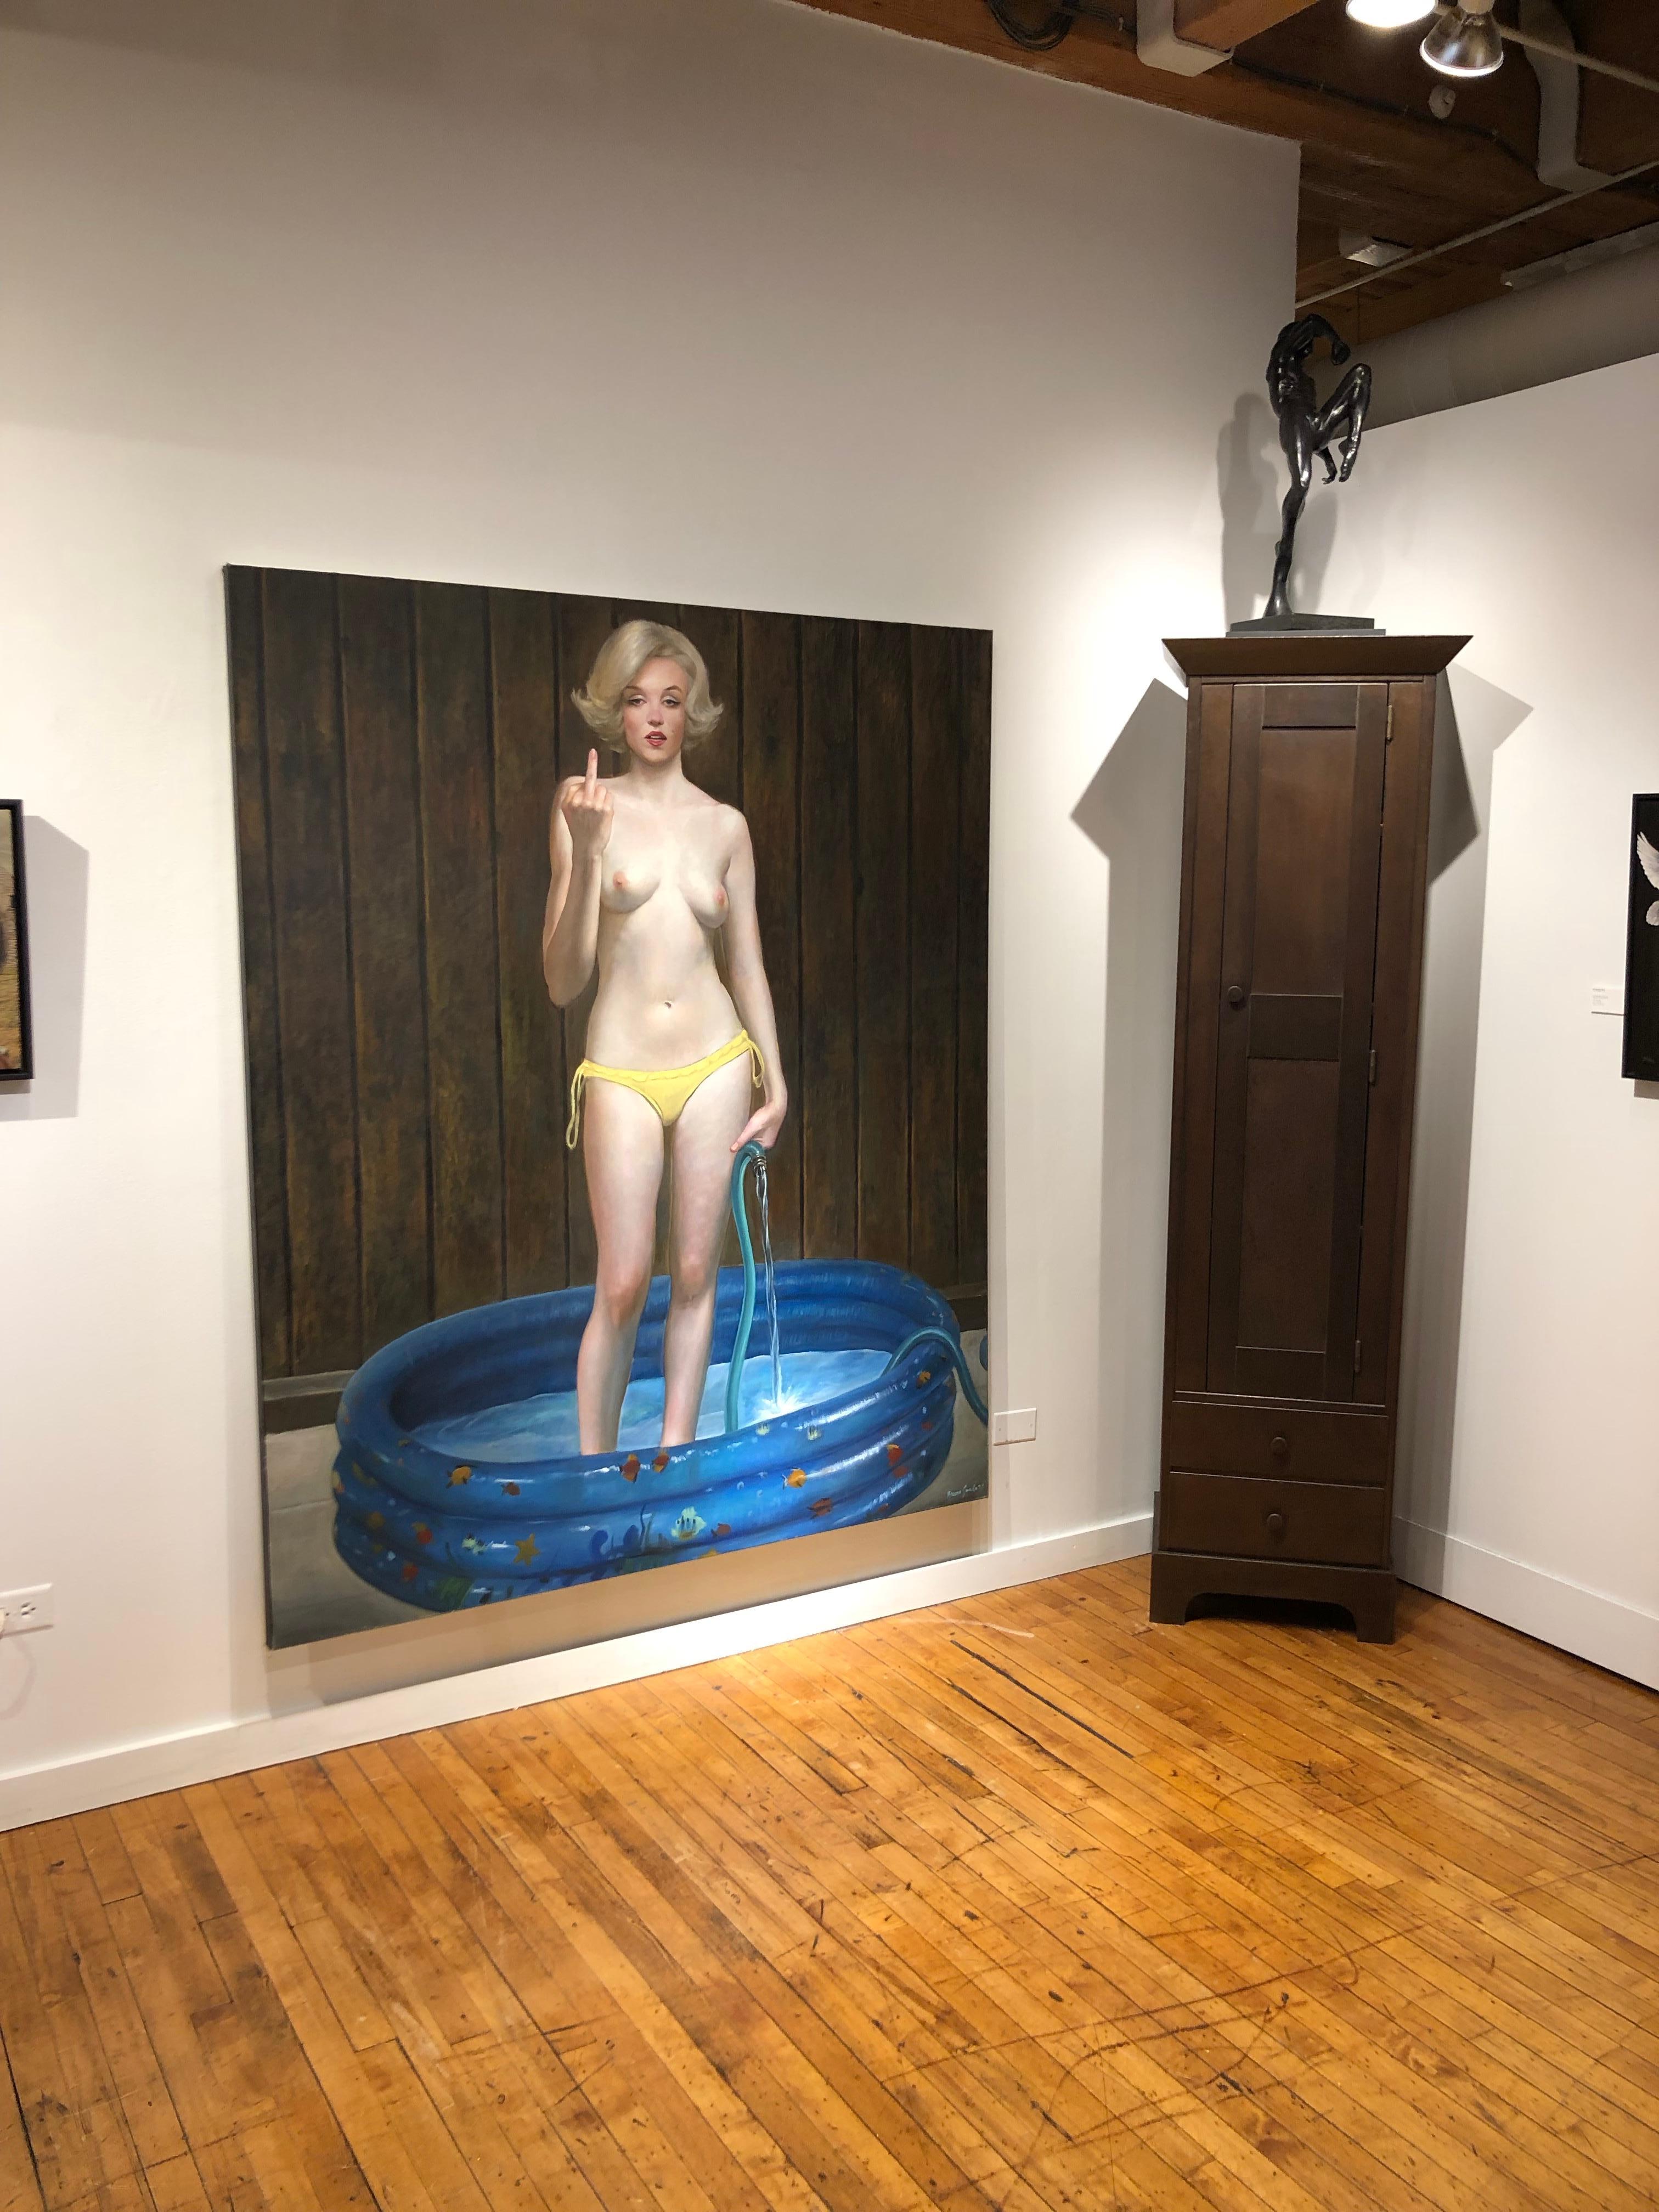 Get Out! - Large Scale Oil Painting of Marilyn Monroe Standing in a Kiddie Pool - Black Nude Painting by Bruno Surdo